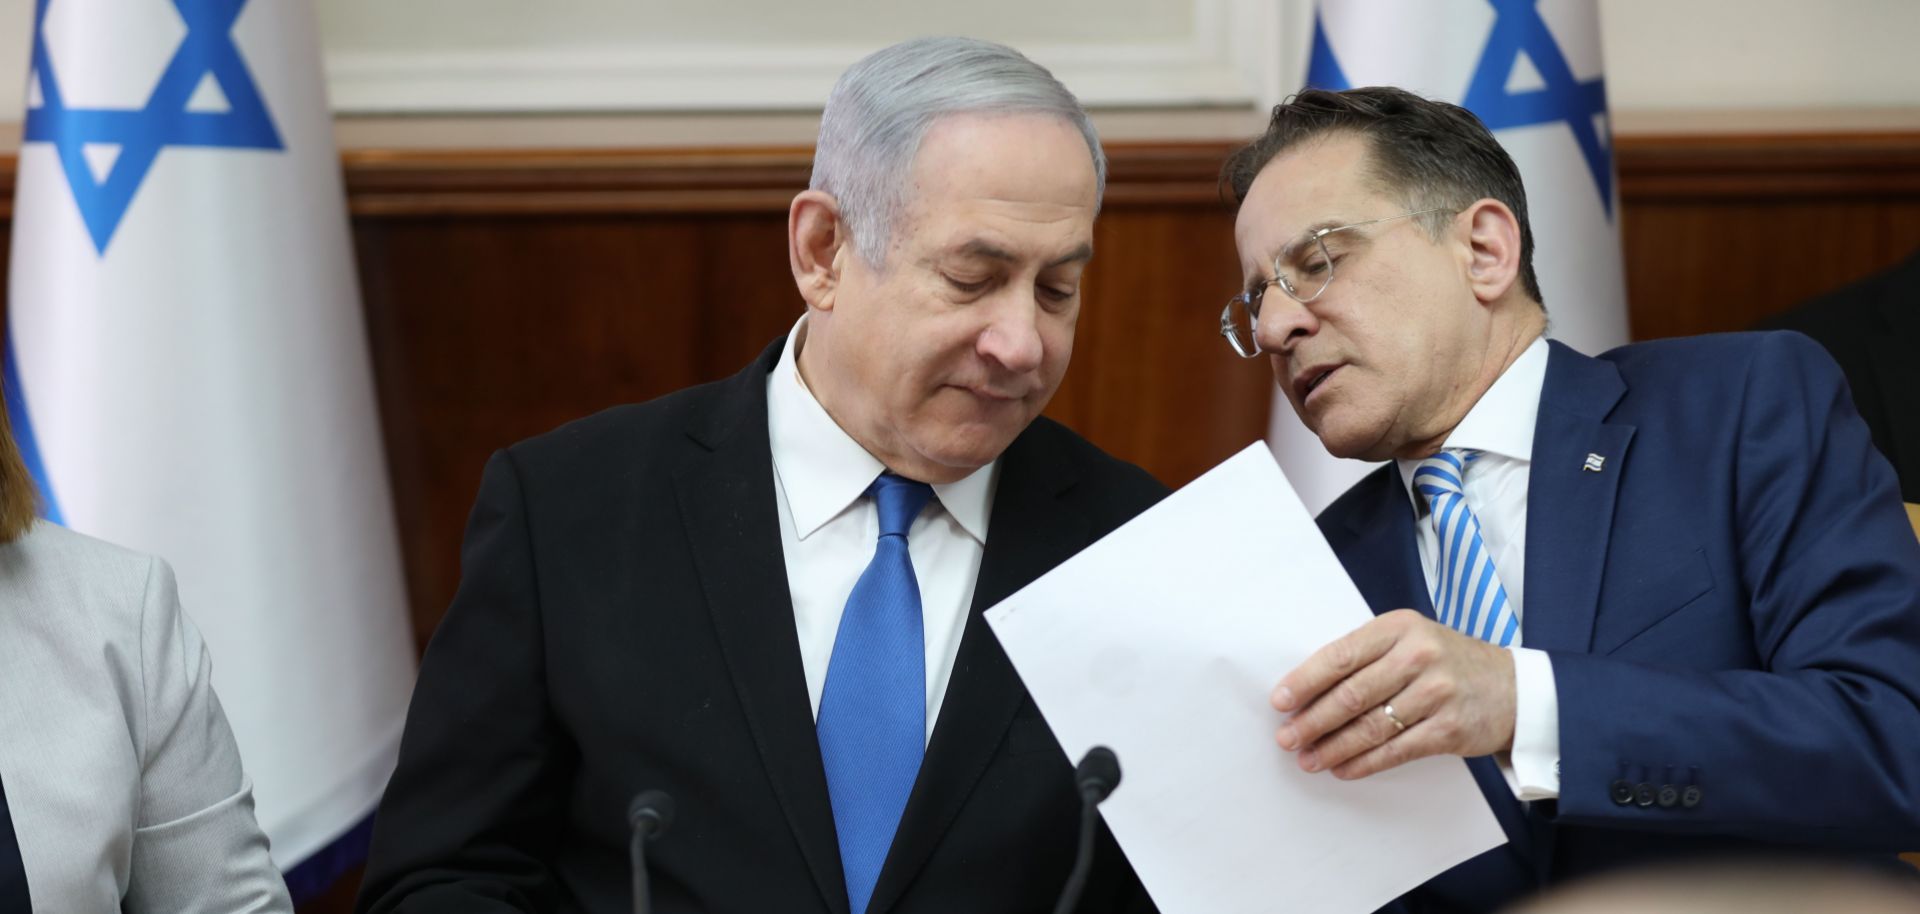 Israeli Prime Minister Benjamin Netanyahu, left, speaks with Cabinet Secretary Tzachi Braverman during a weekly Cabinet meeting in Jerusalem on Dec. 1, 2019.